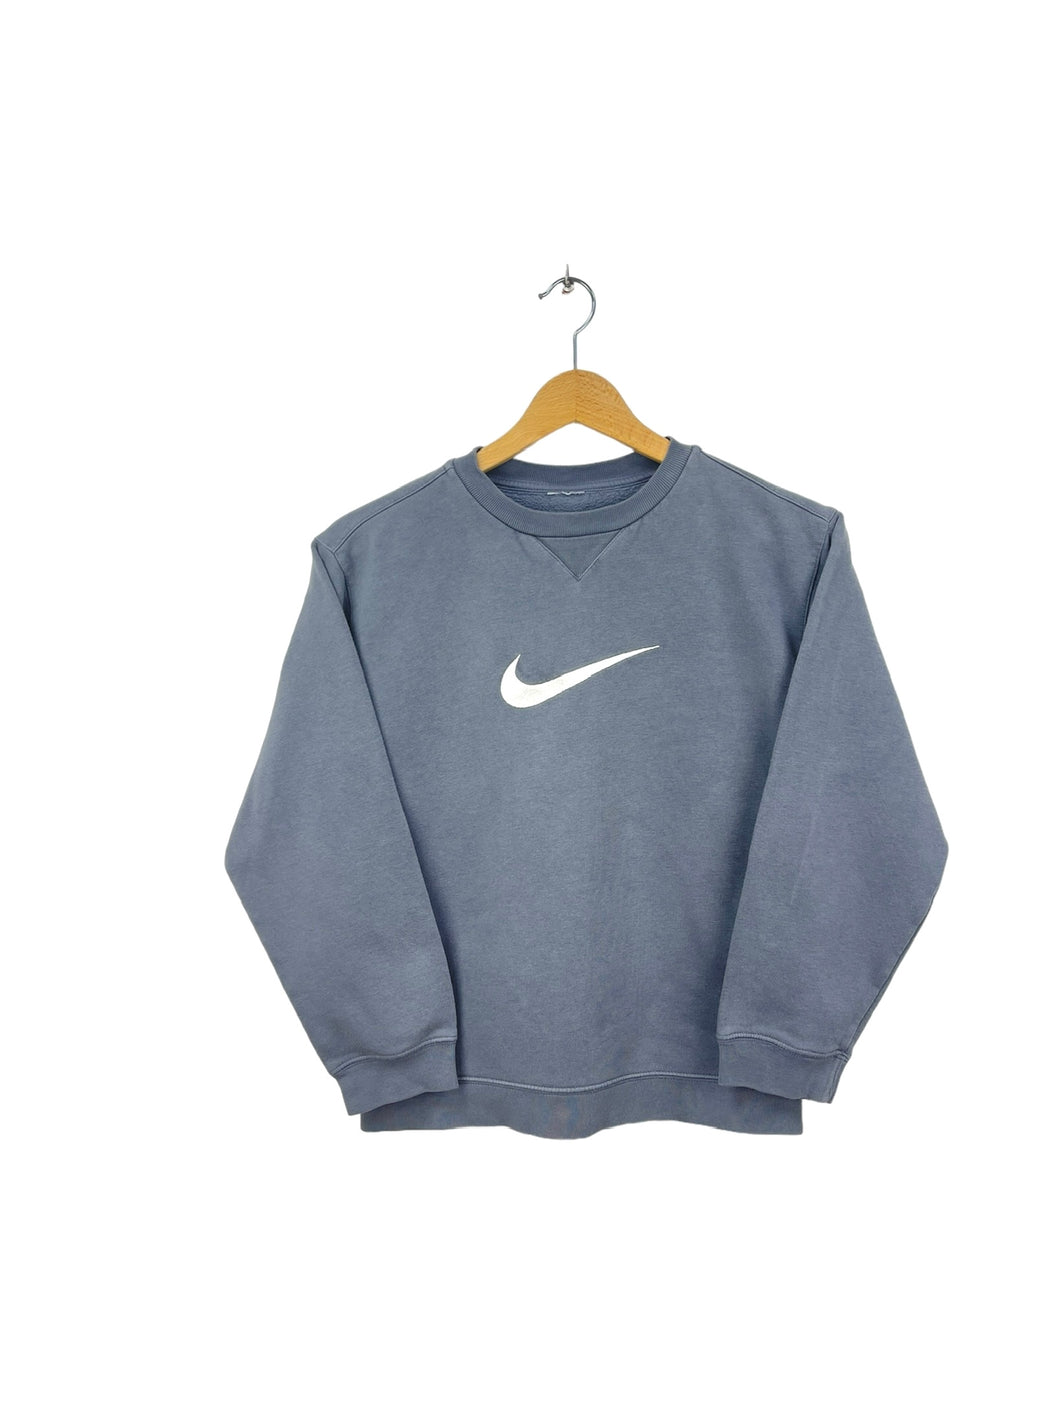 Nike Sweatshirt - XXSmall